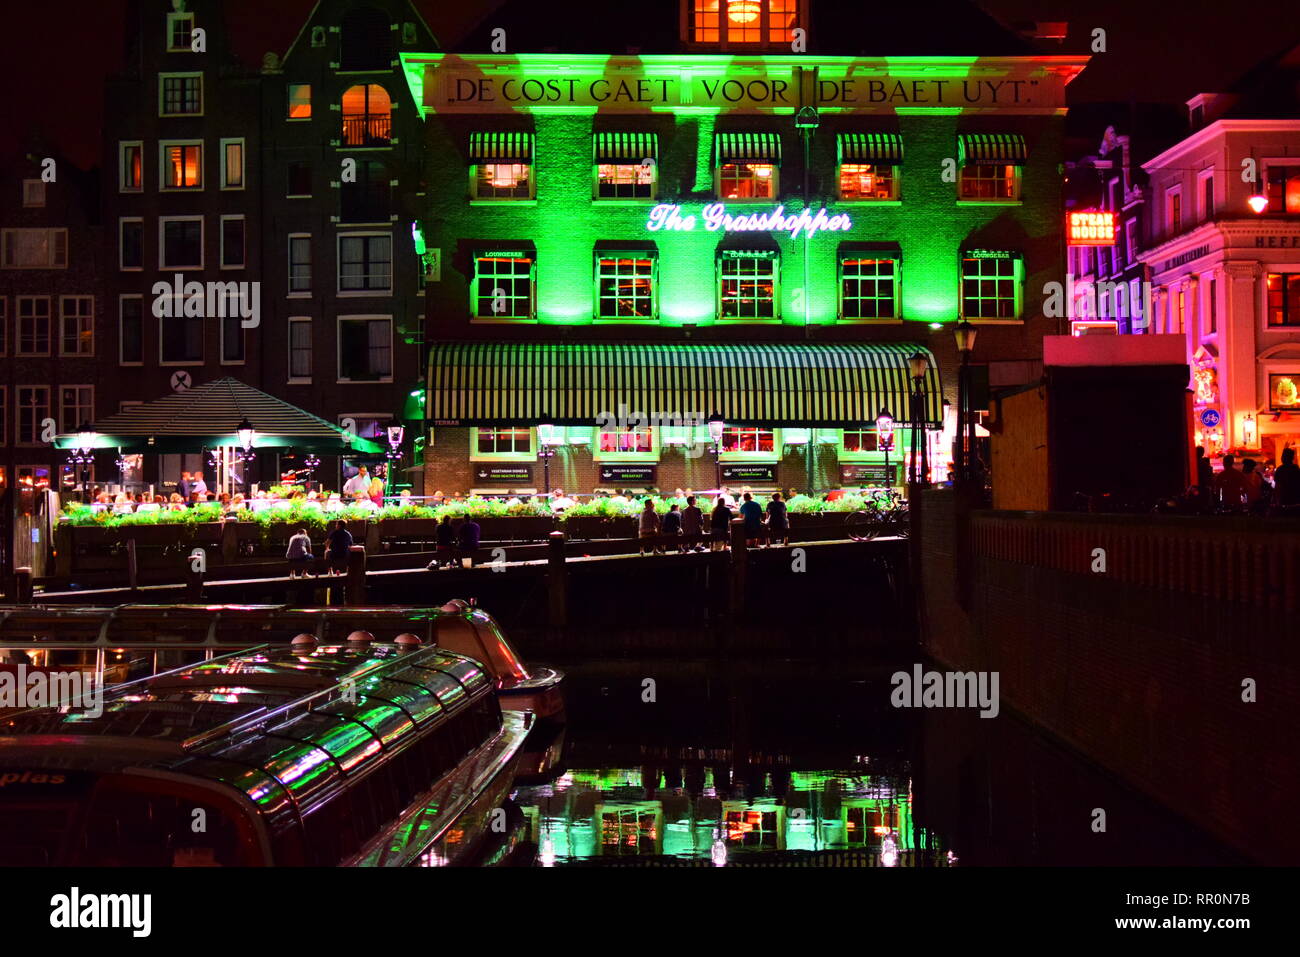 amsterdam - famous coffee shop night shot Stock Photo